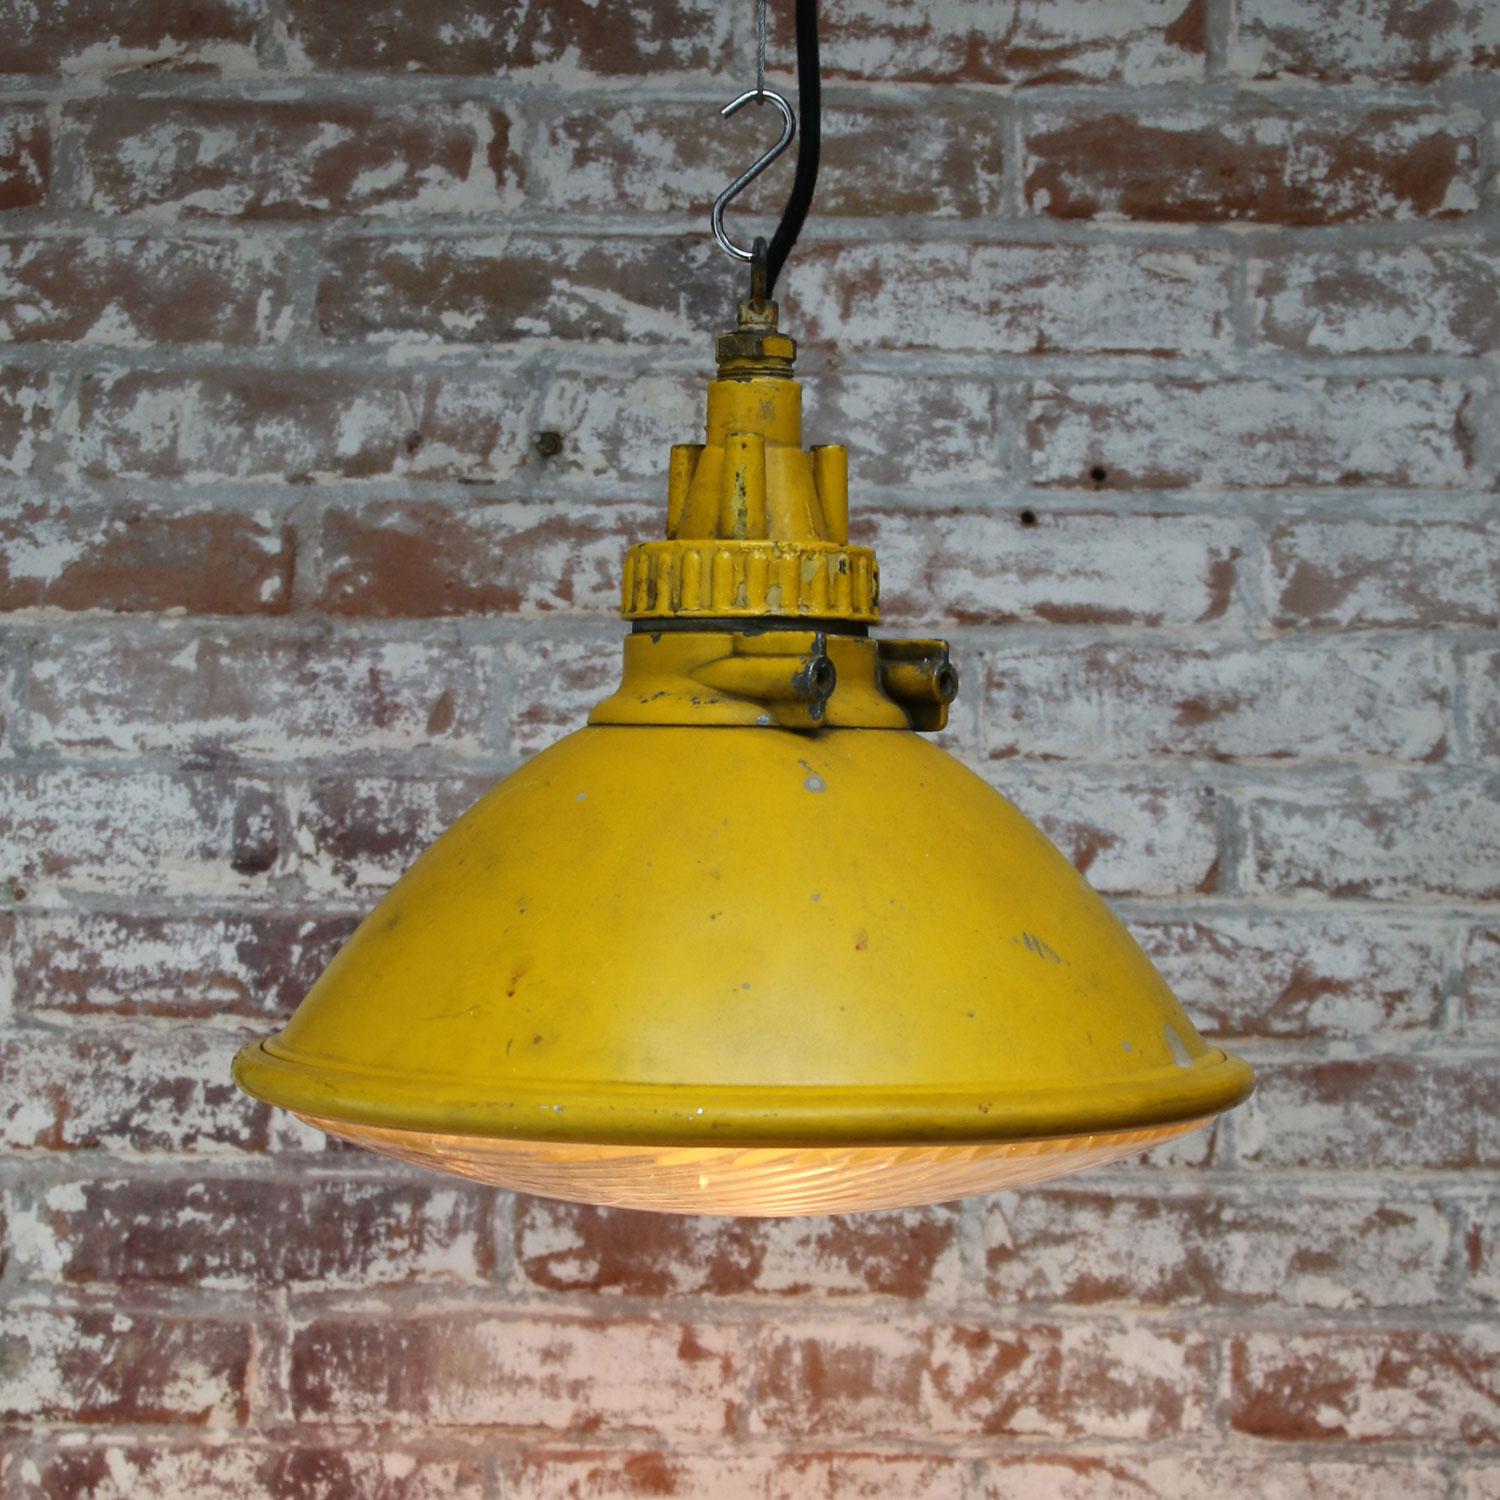 yellow metal pendant light